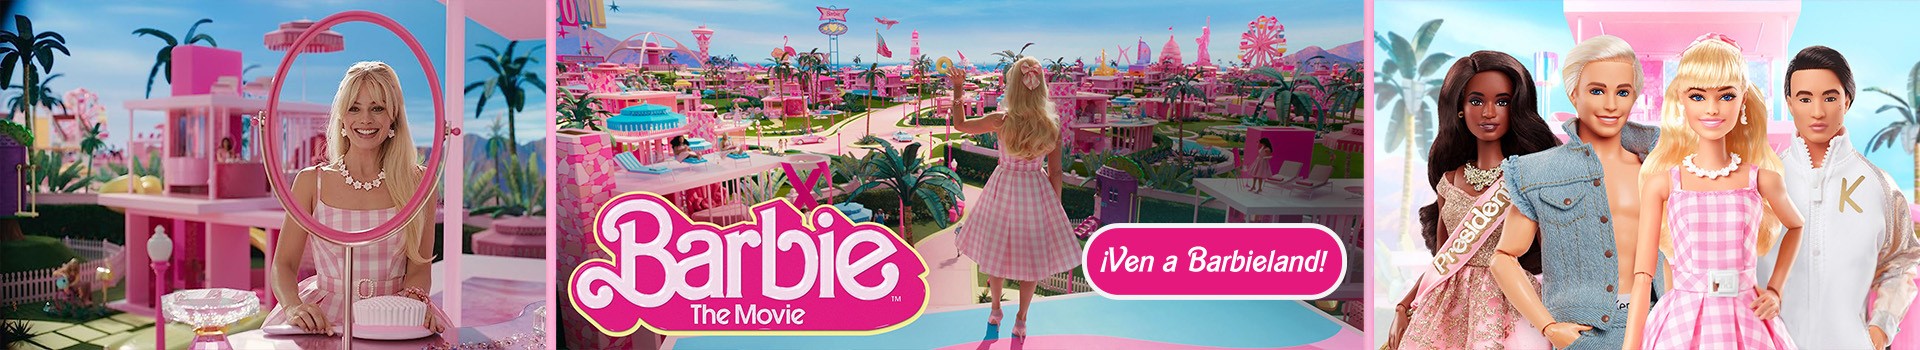 Barbie The movie